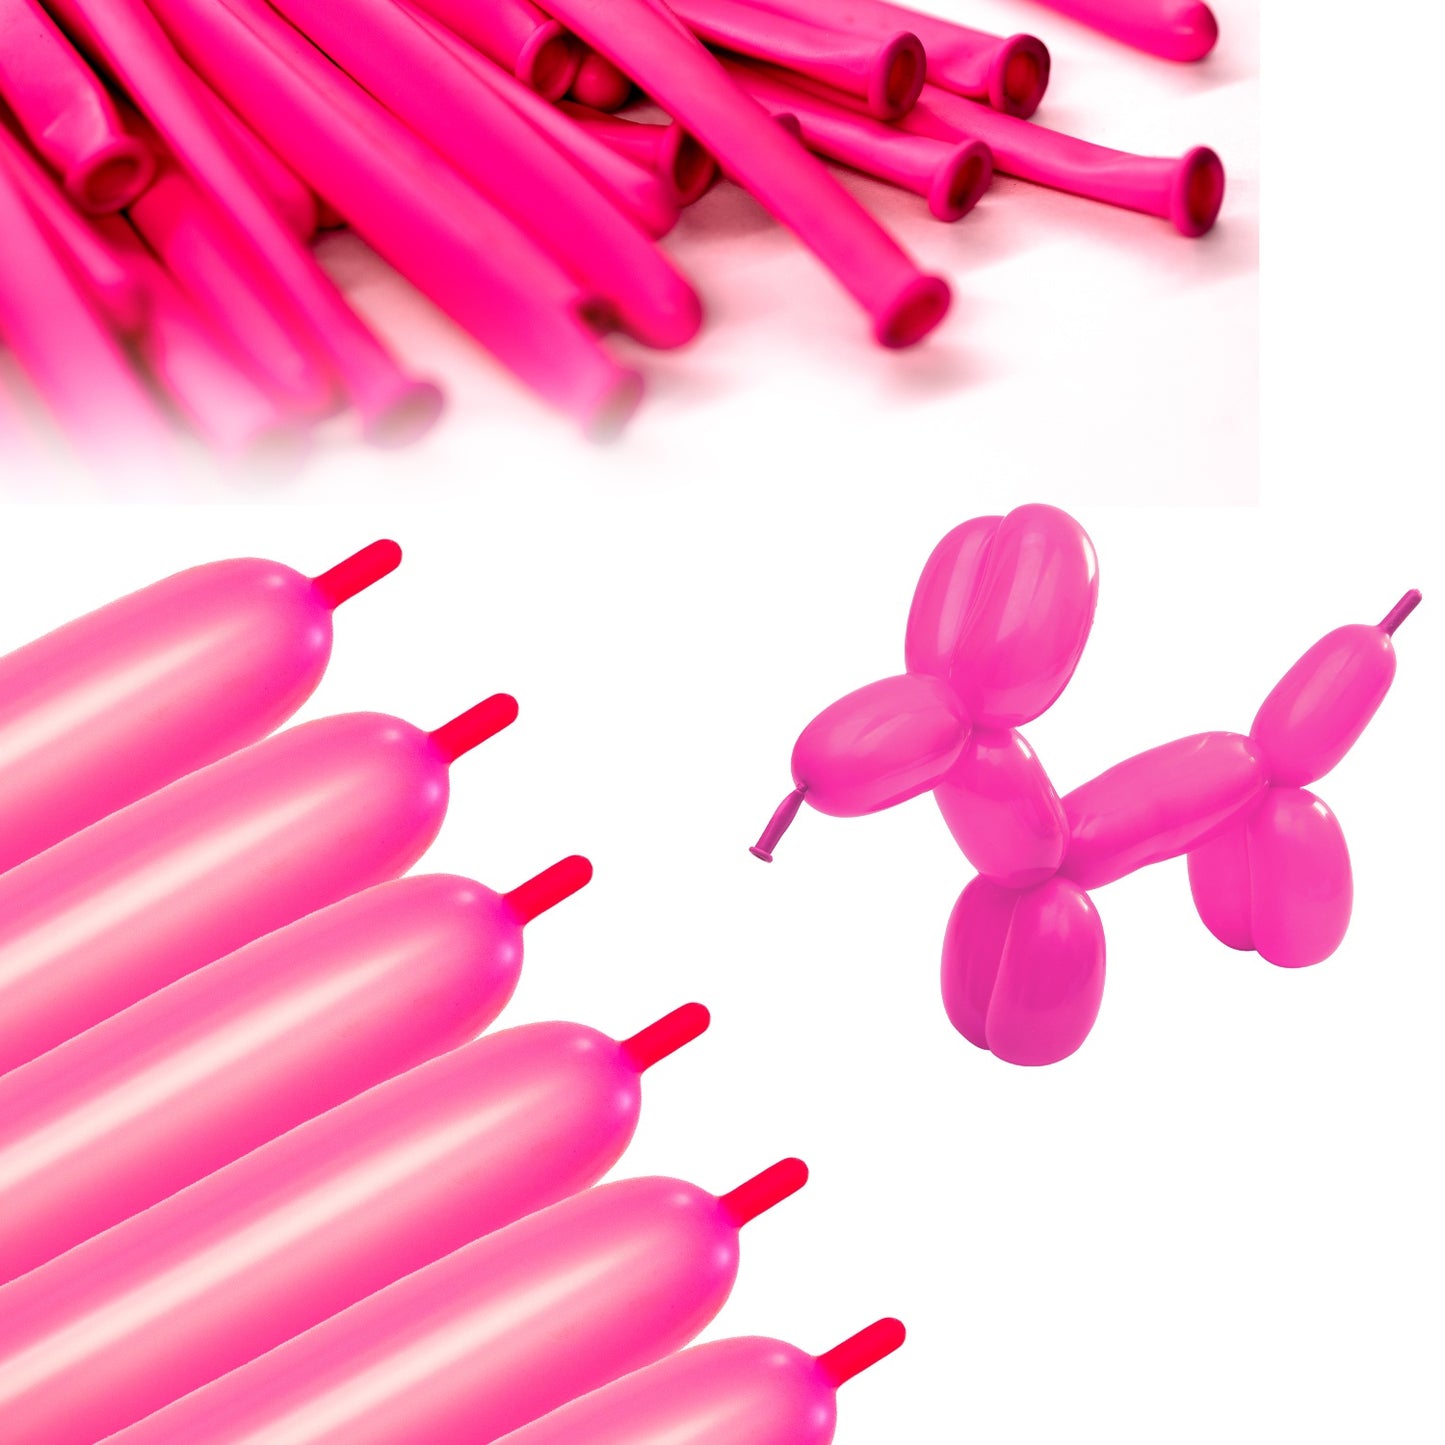 Clownatex 260 Balloons - Neon Pink (100 pcs)